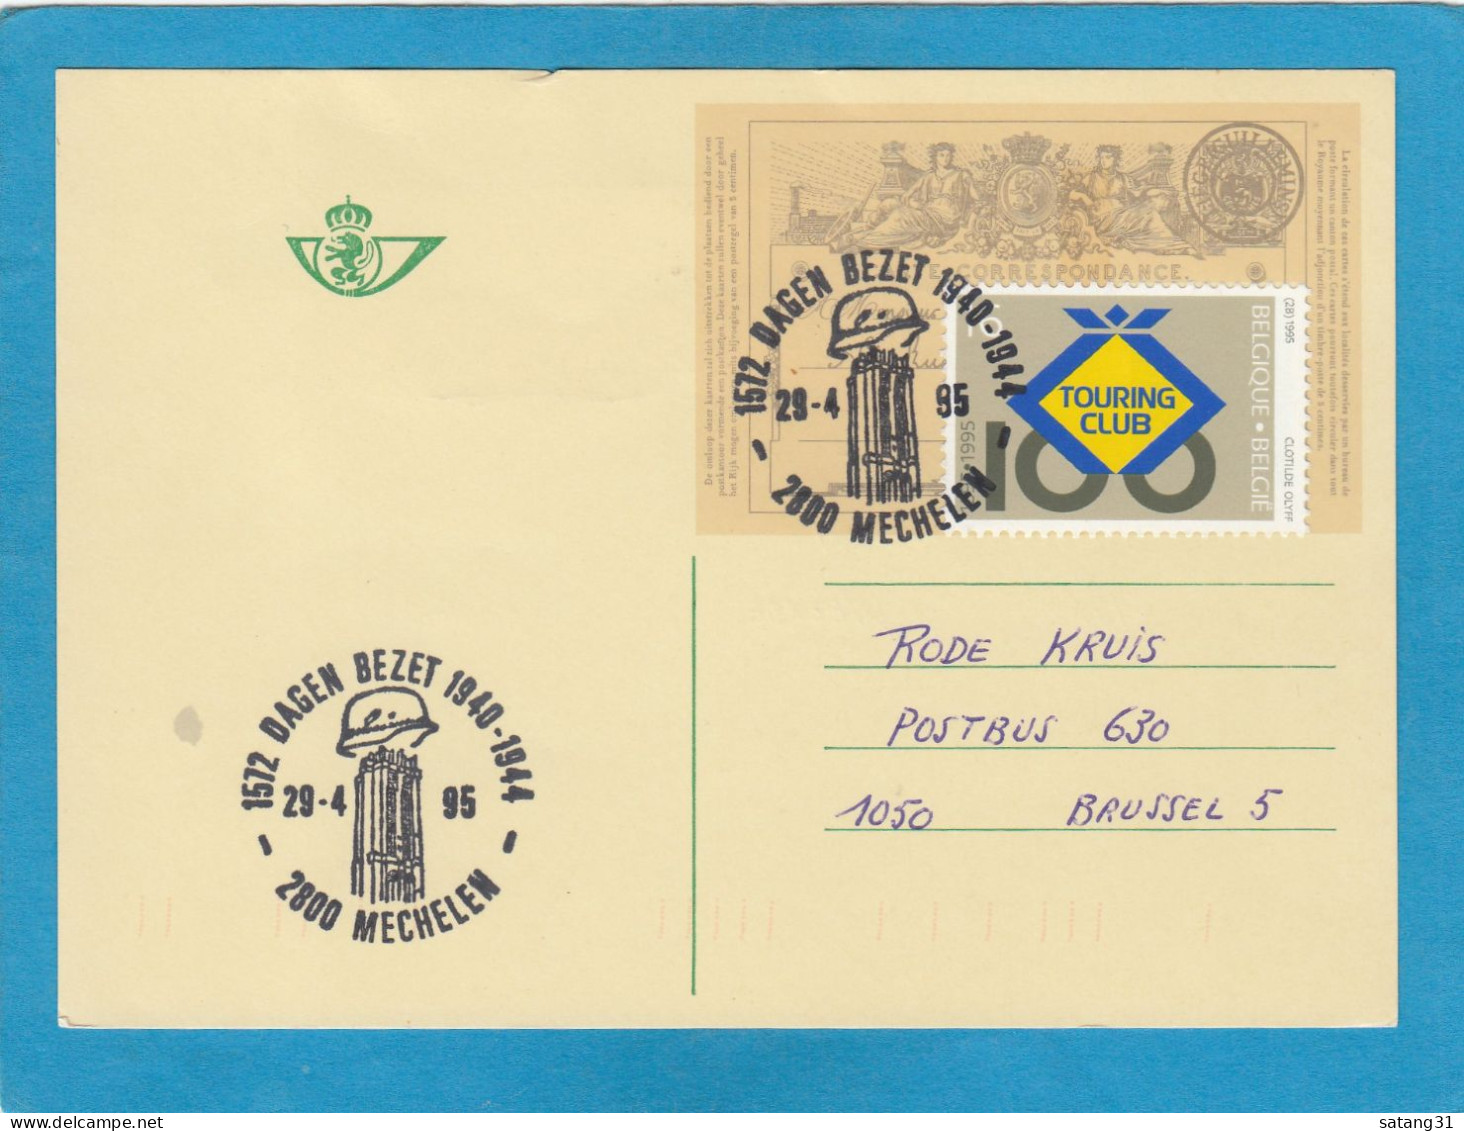 ENTIER POSTAL AVEC TIMBRE "TOURING CLUB" ET CACHET "1572 DAGEN BEZET 1940-1944 MECHELEN 29-4-95". - Postcards 1951-..